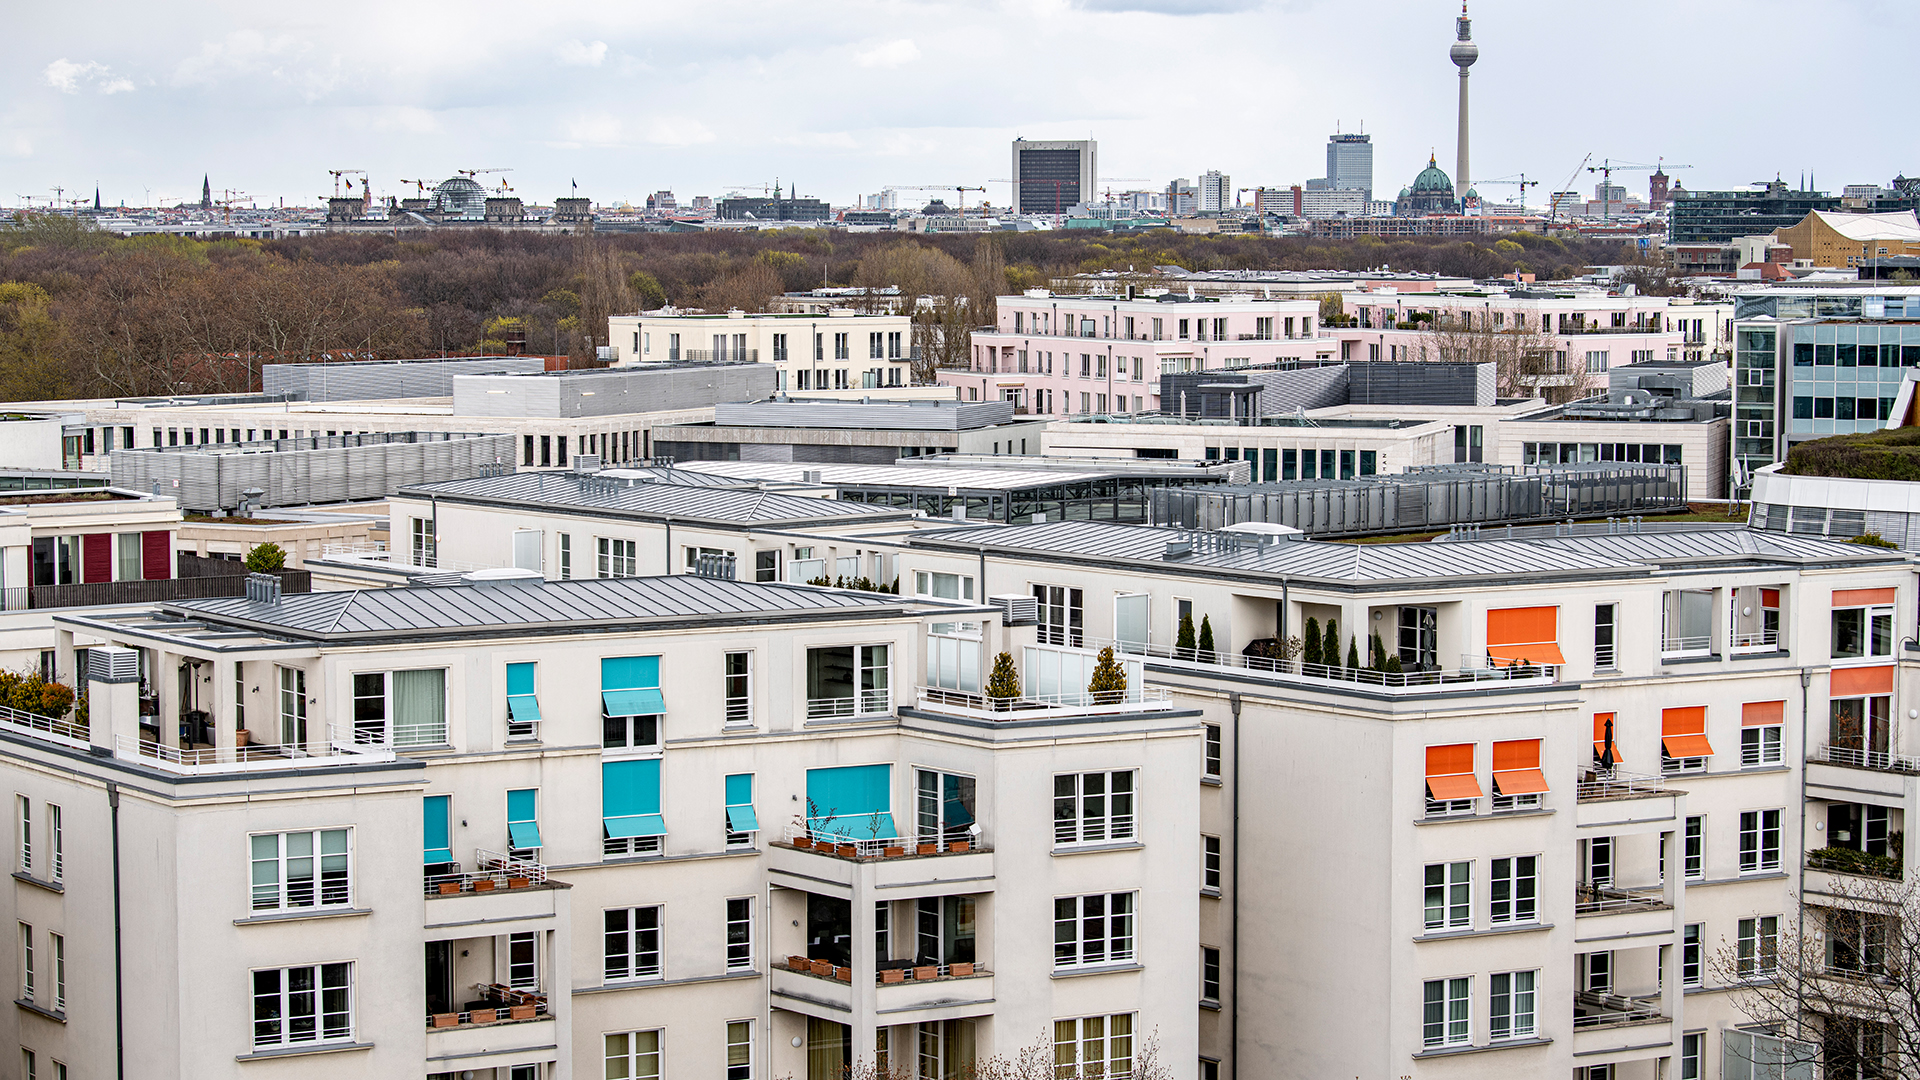 Wohnhäuser in Berlin